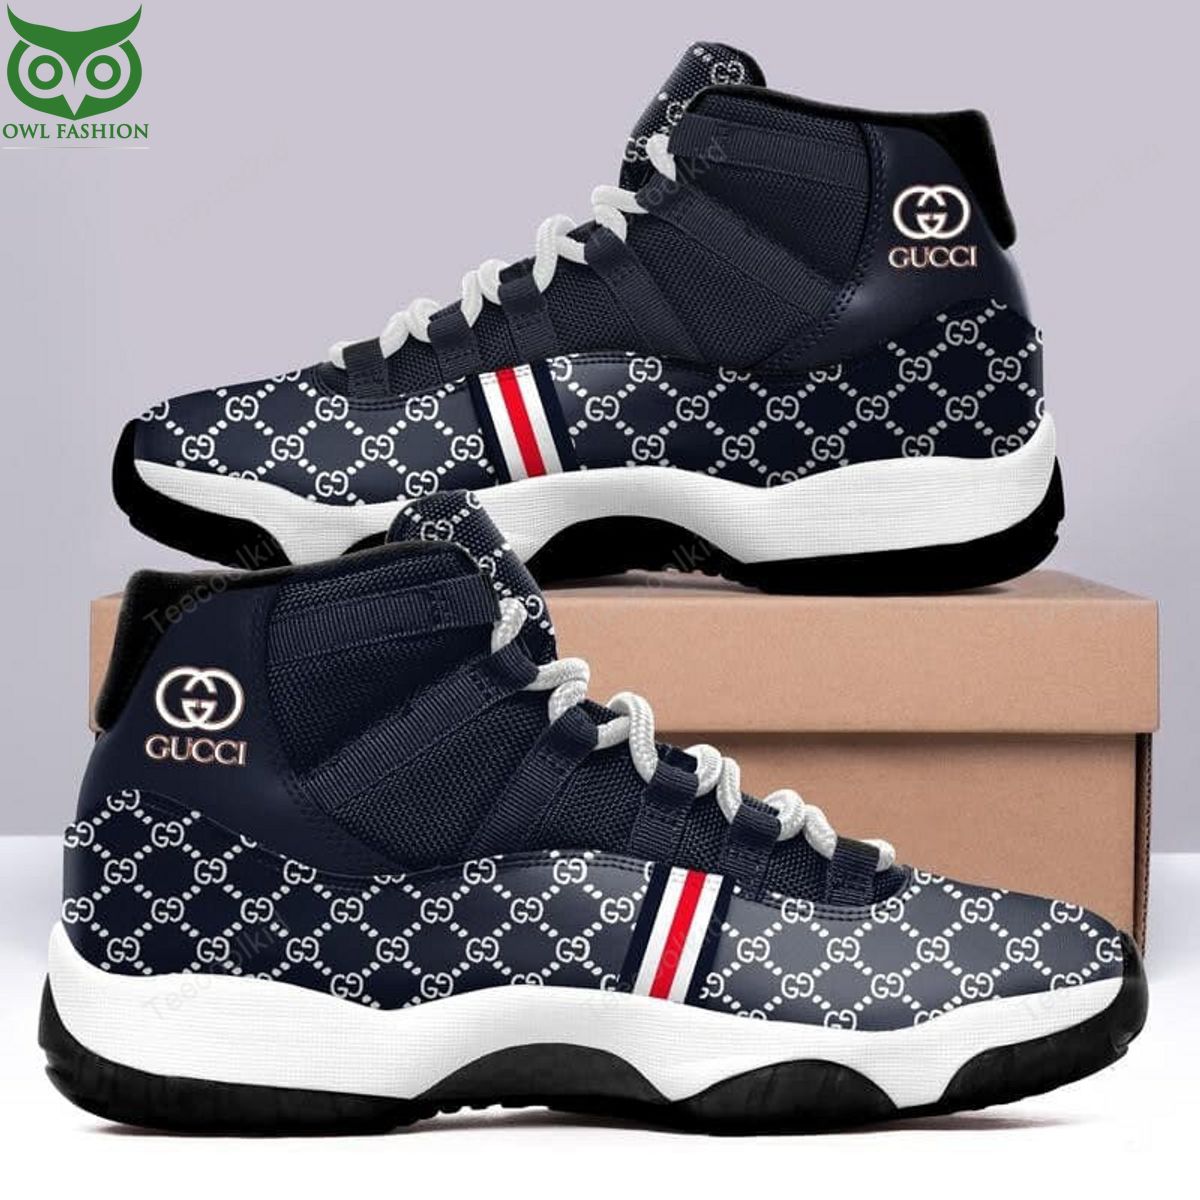 Limited Gucci Running Sneakers Air Jordan 11